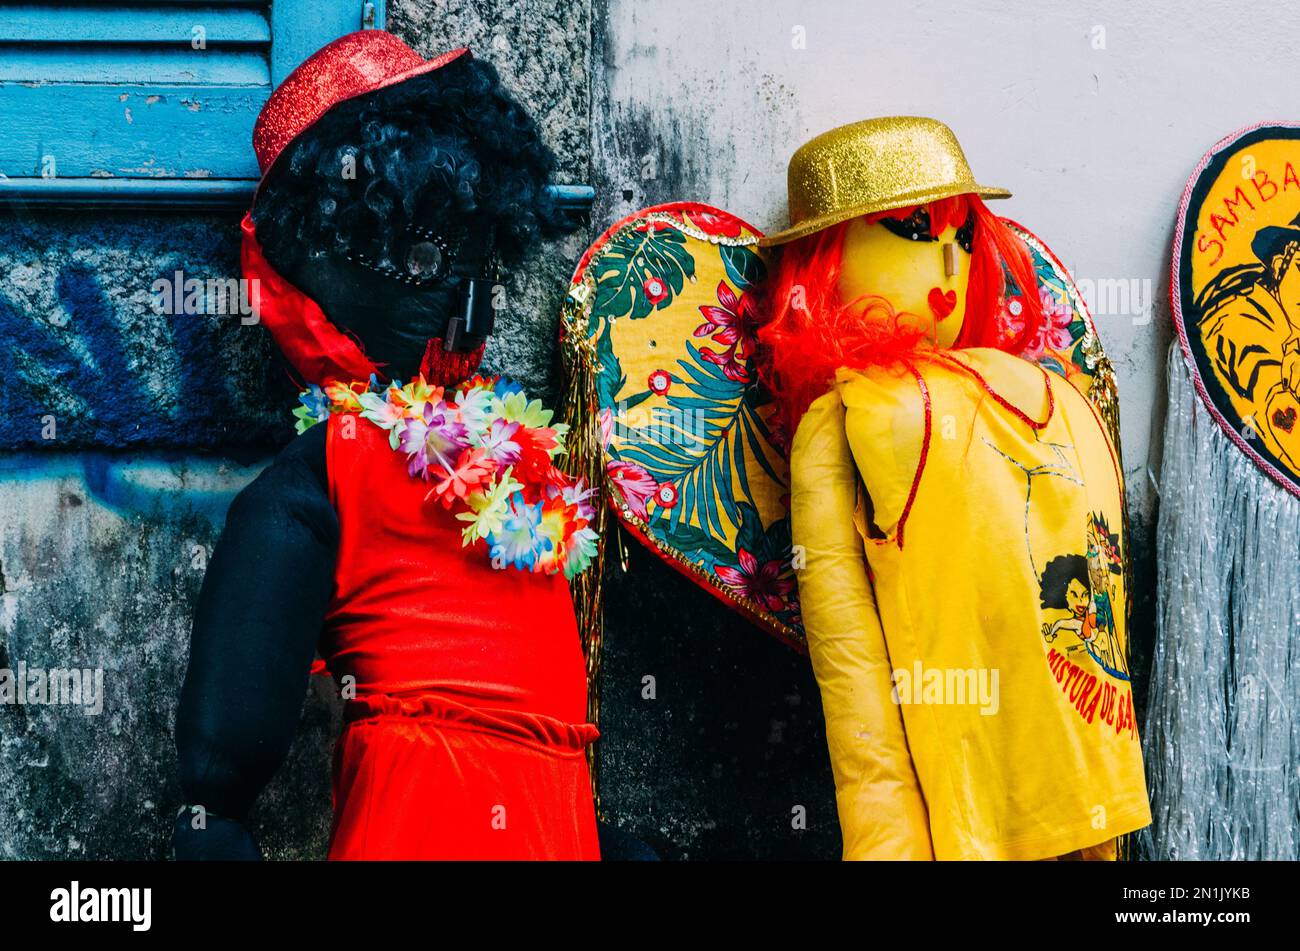 Rio de Janeiro, Brazil - February 4, 2023: Colourful dolls on display in Rio de Janeiro, Brazil carnival Stock Photo